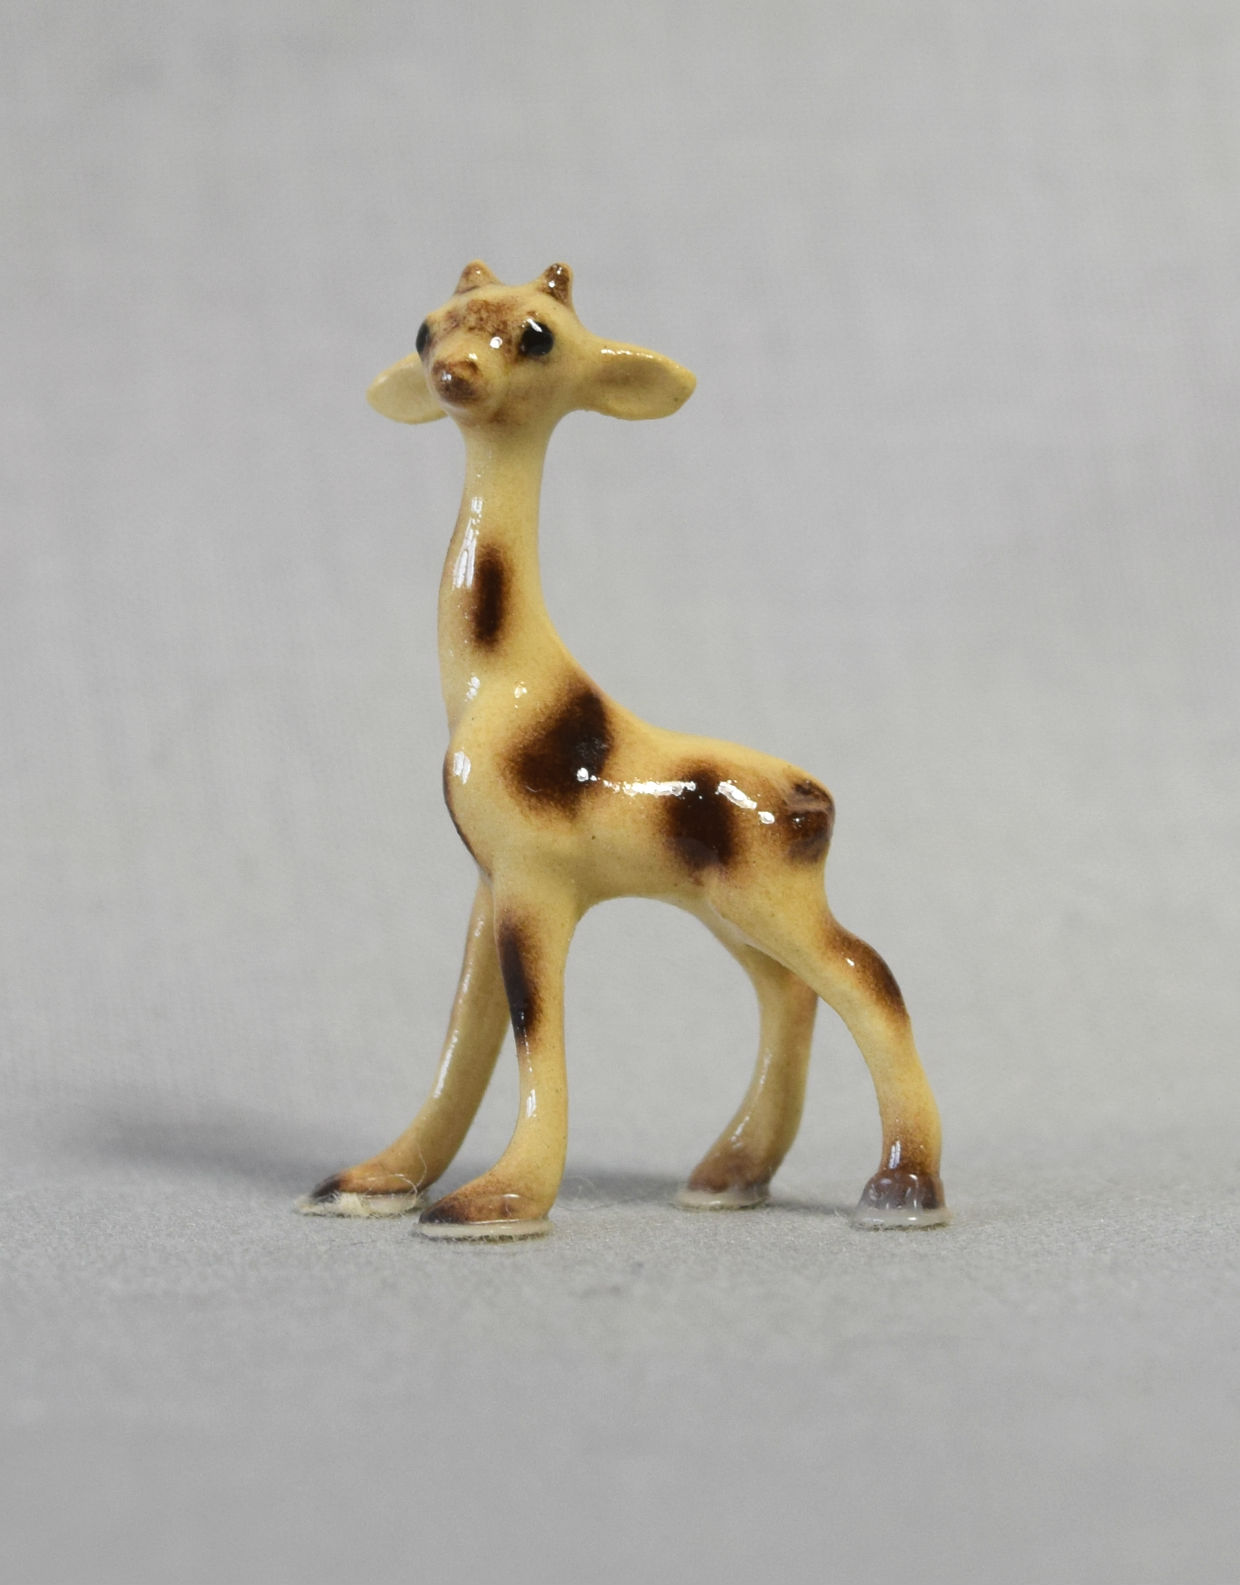 Giraffe baby, facing left-image